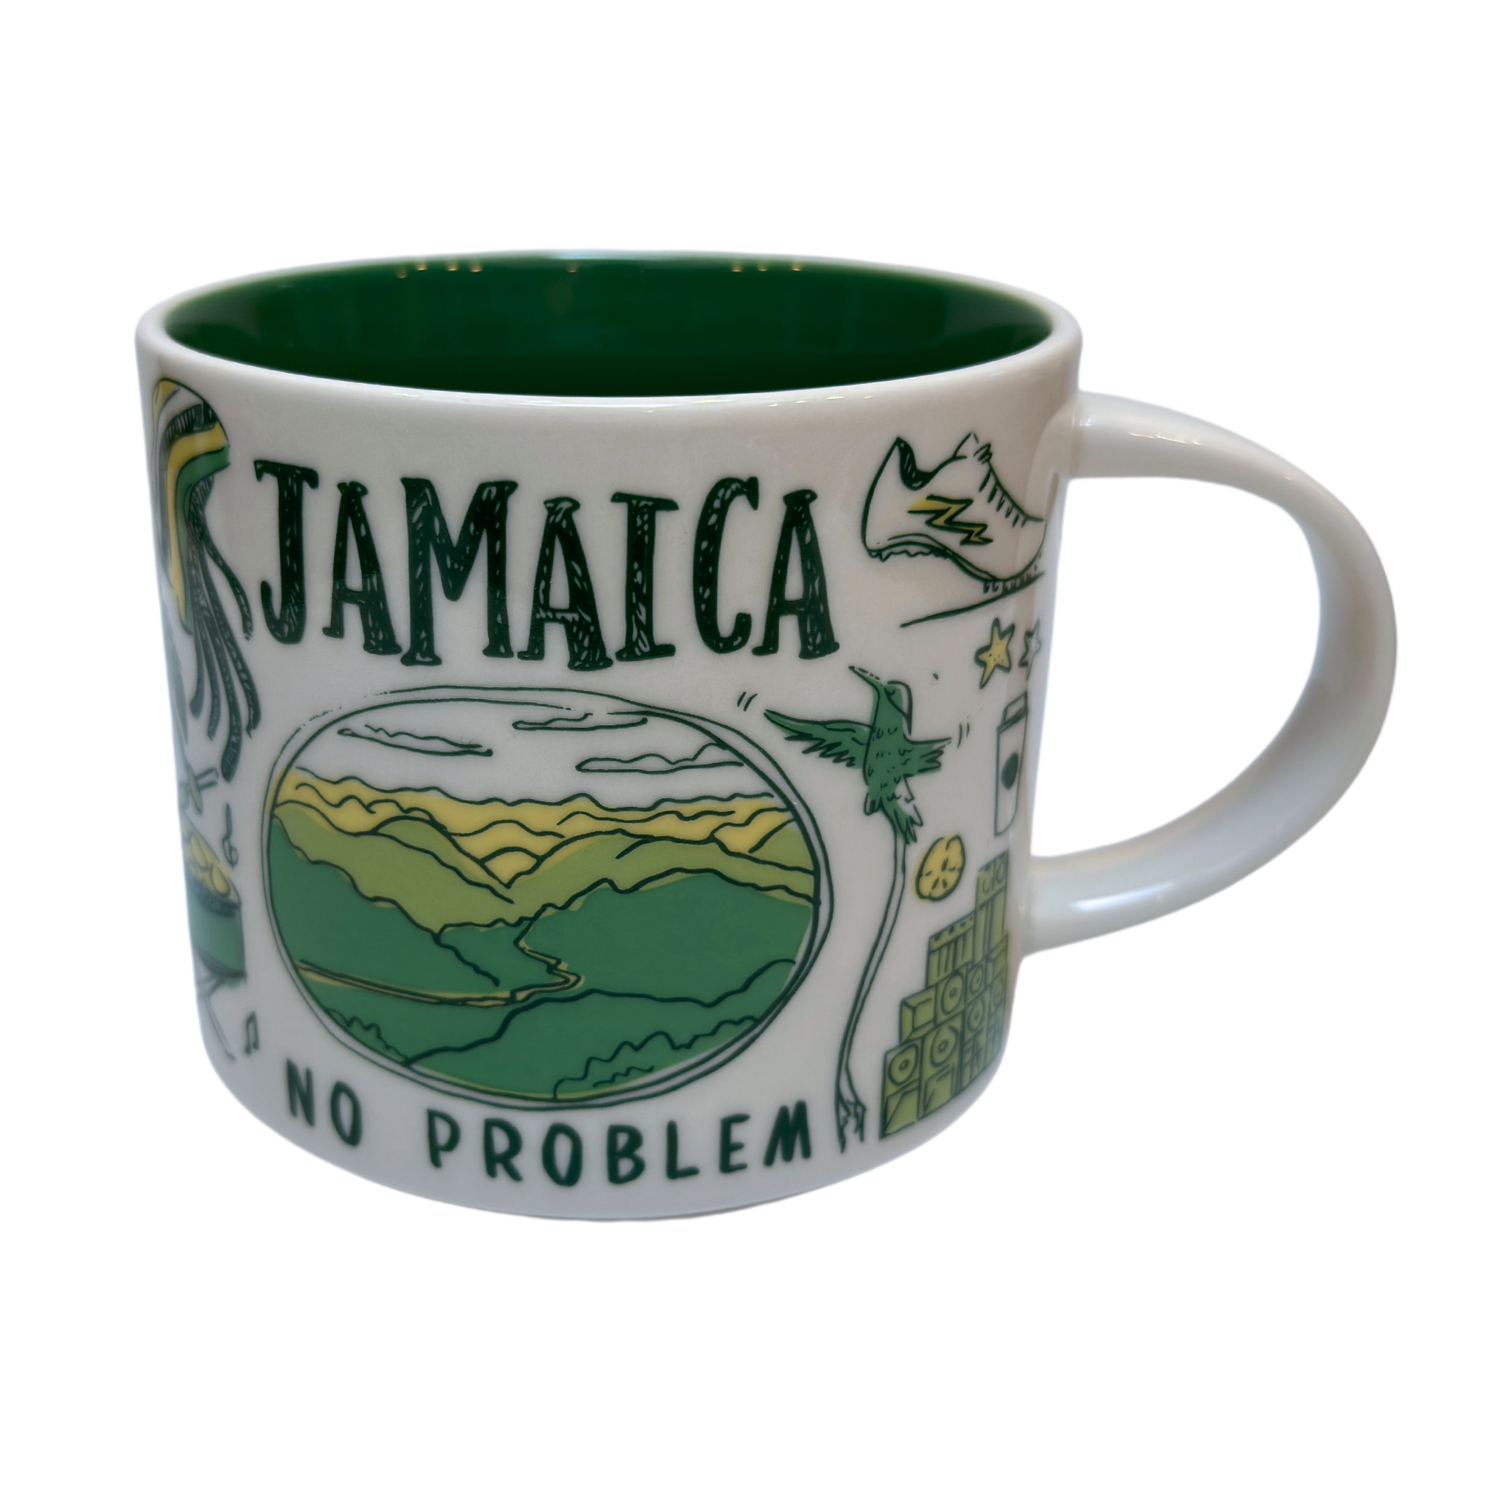 Starbucks Been There Series Jamaica Ceramic Mug, 14 Oz